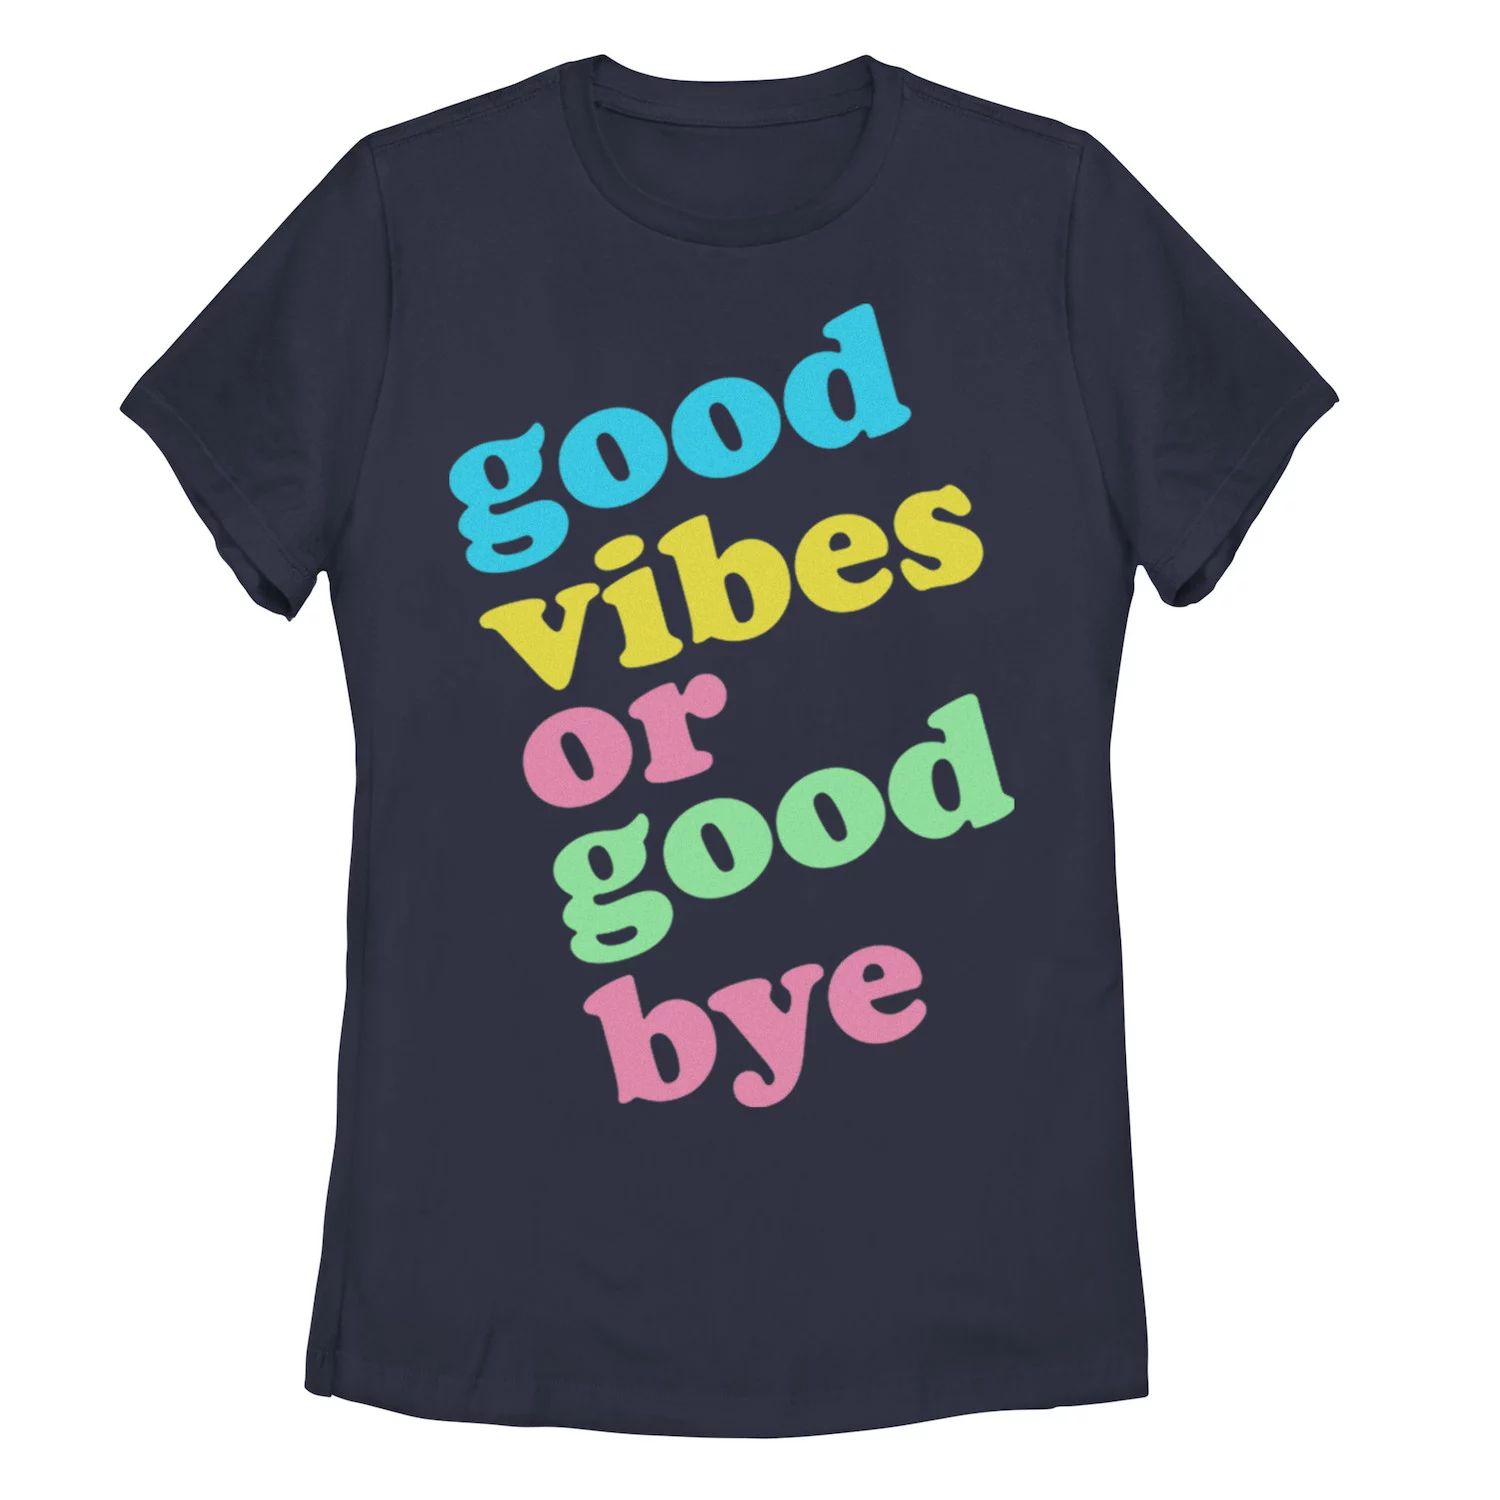 Футболка с рисунком «Good Vibes or Good Bye» для юниоров